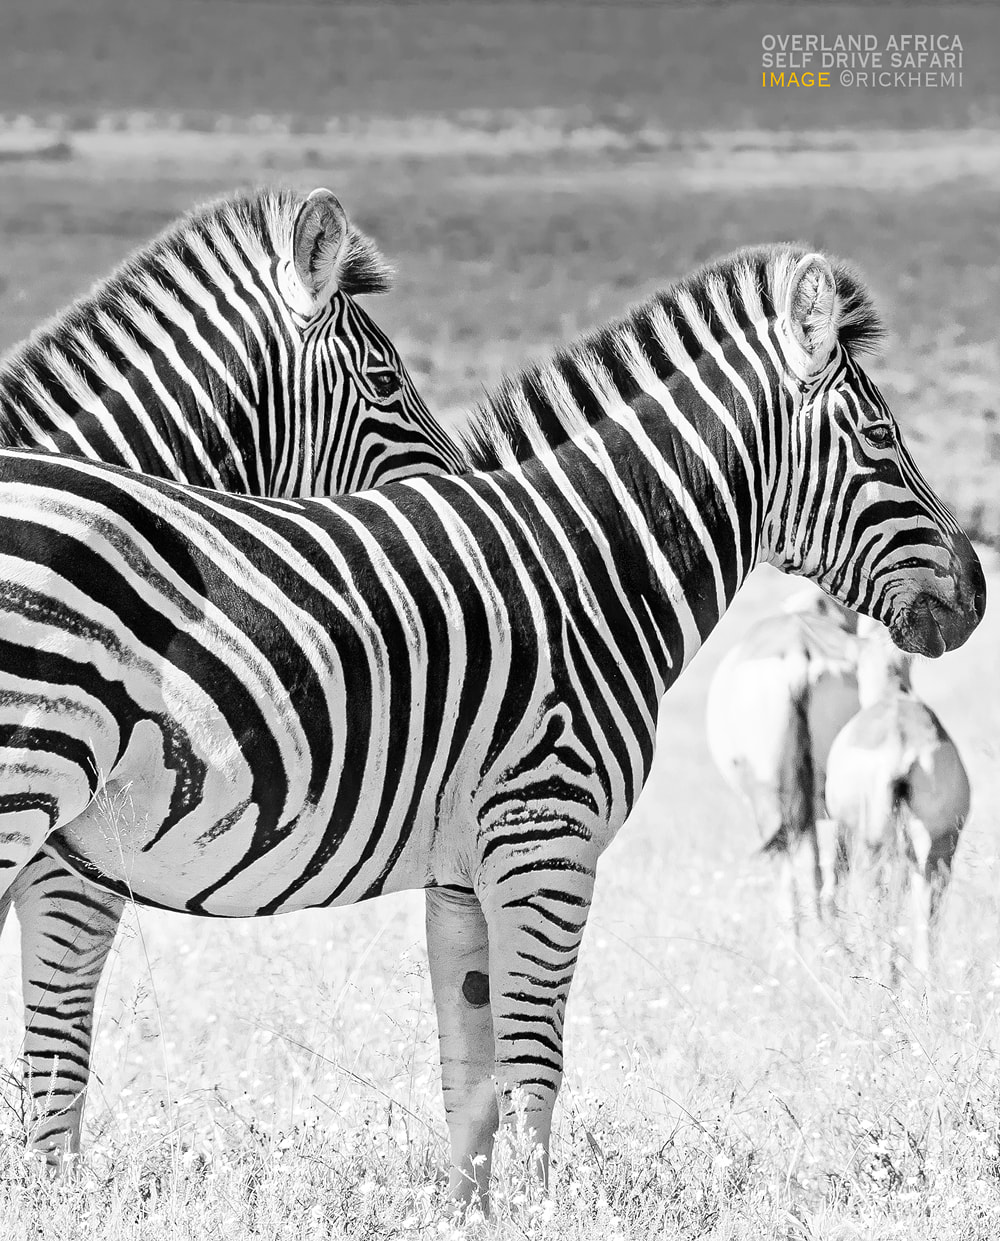 solo overland travel Africa, wildlife self drive safari image by Rick Hemi